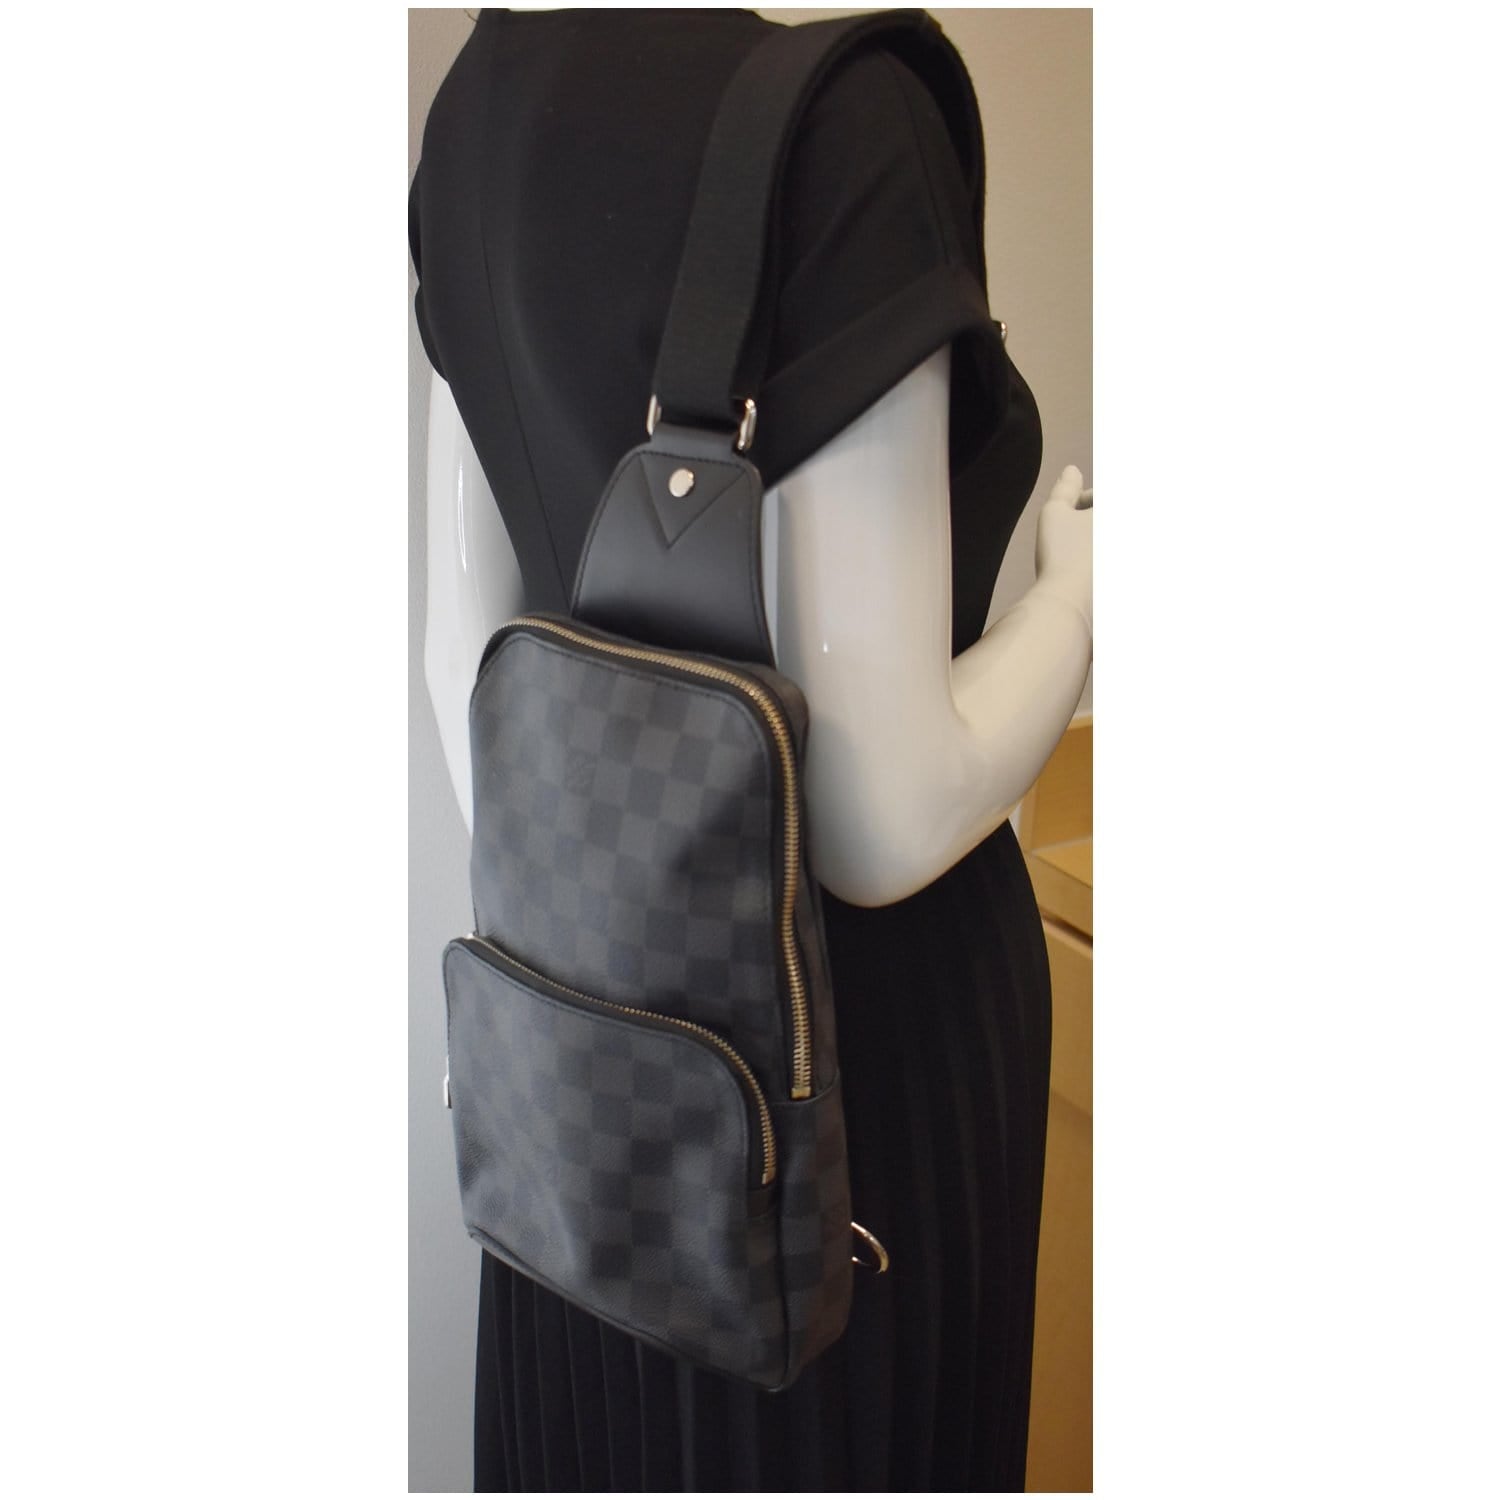 True-to-ORIGINAL] Louis Vuitton Avenue Sling Bag Black For Women